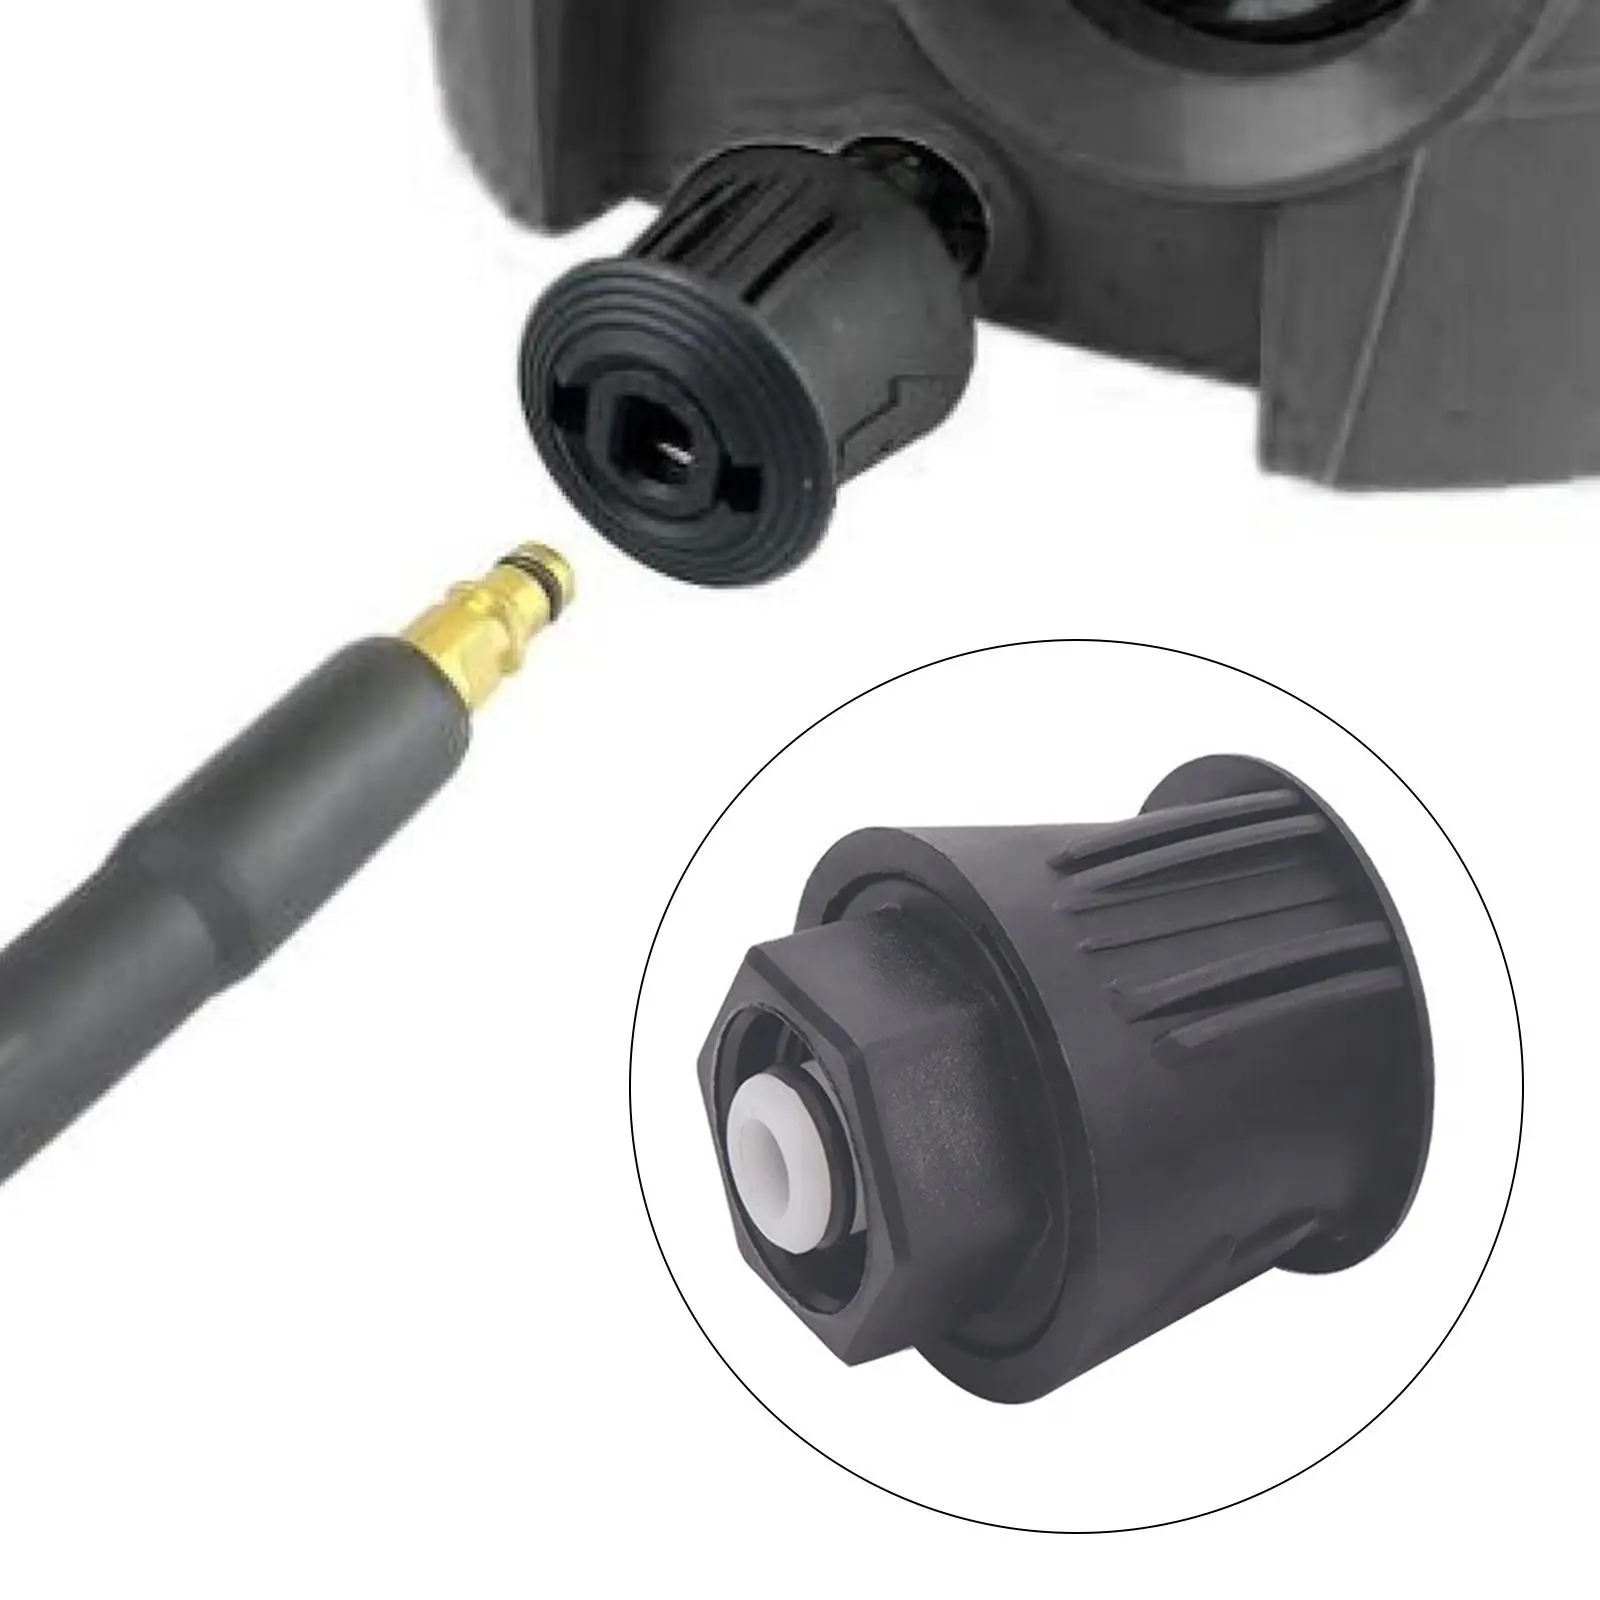 Plastic High Pressure Hose Adaptor M22 14mm Accessories High Pressure  Coupling for Garden Lawn for  K2 K3 K4 K5 K6 K7